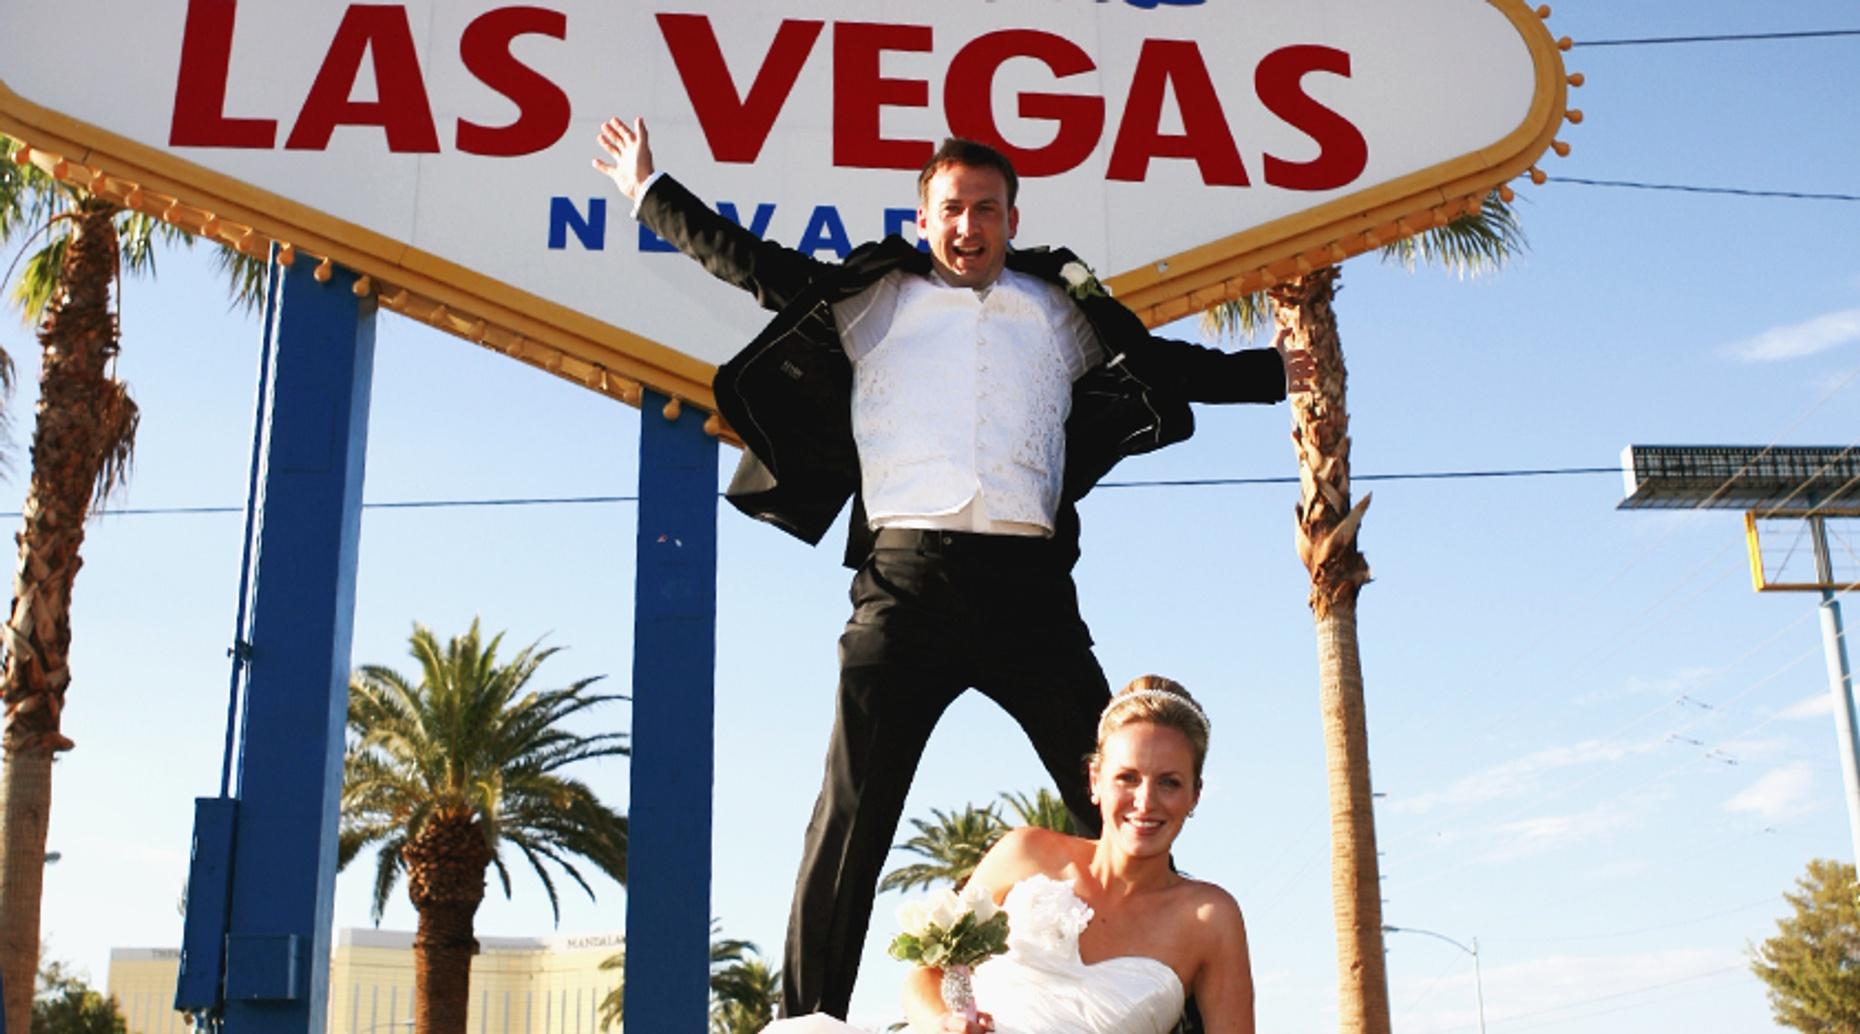 Vegas Chapel Renewal of Vows